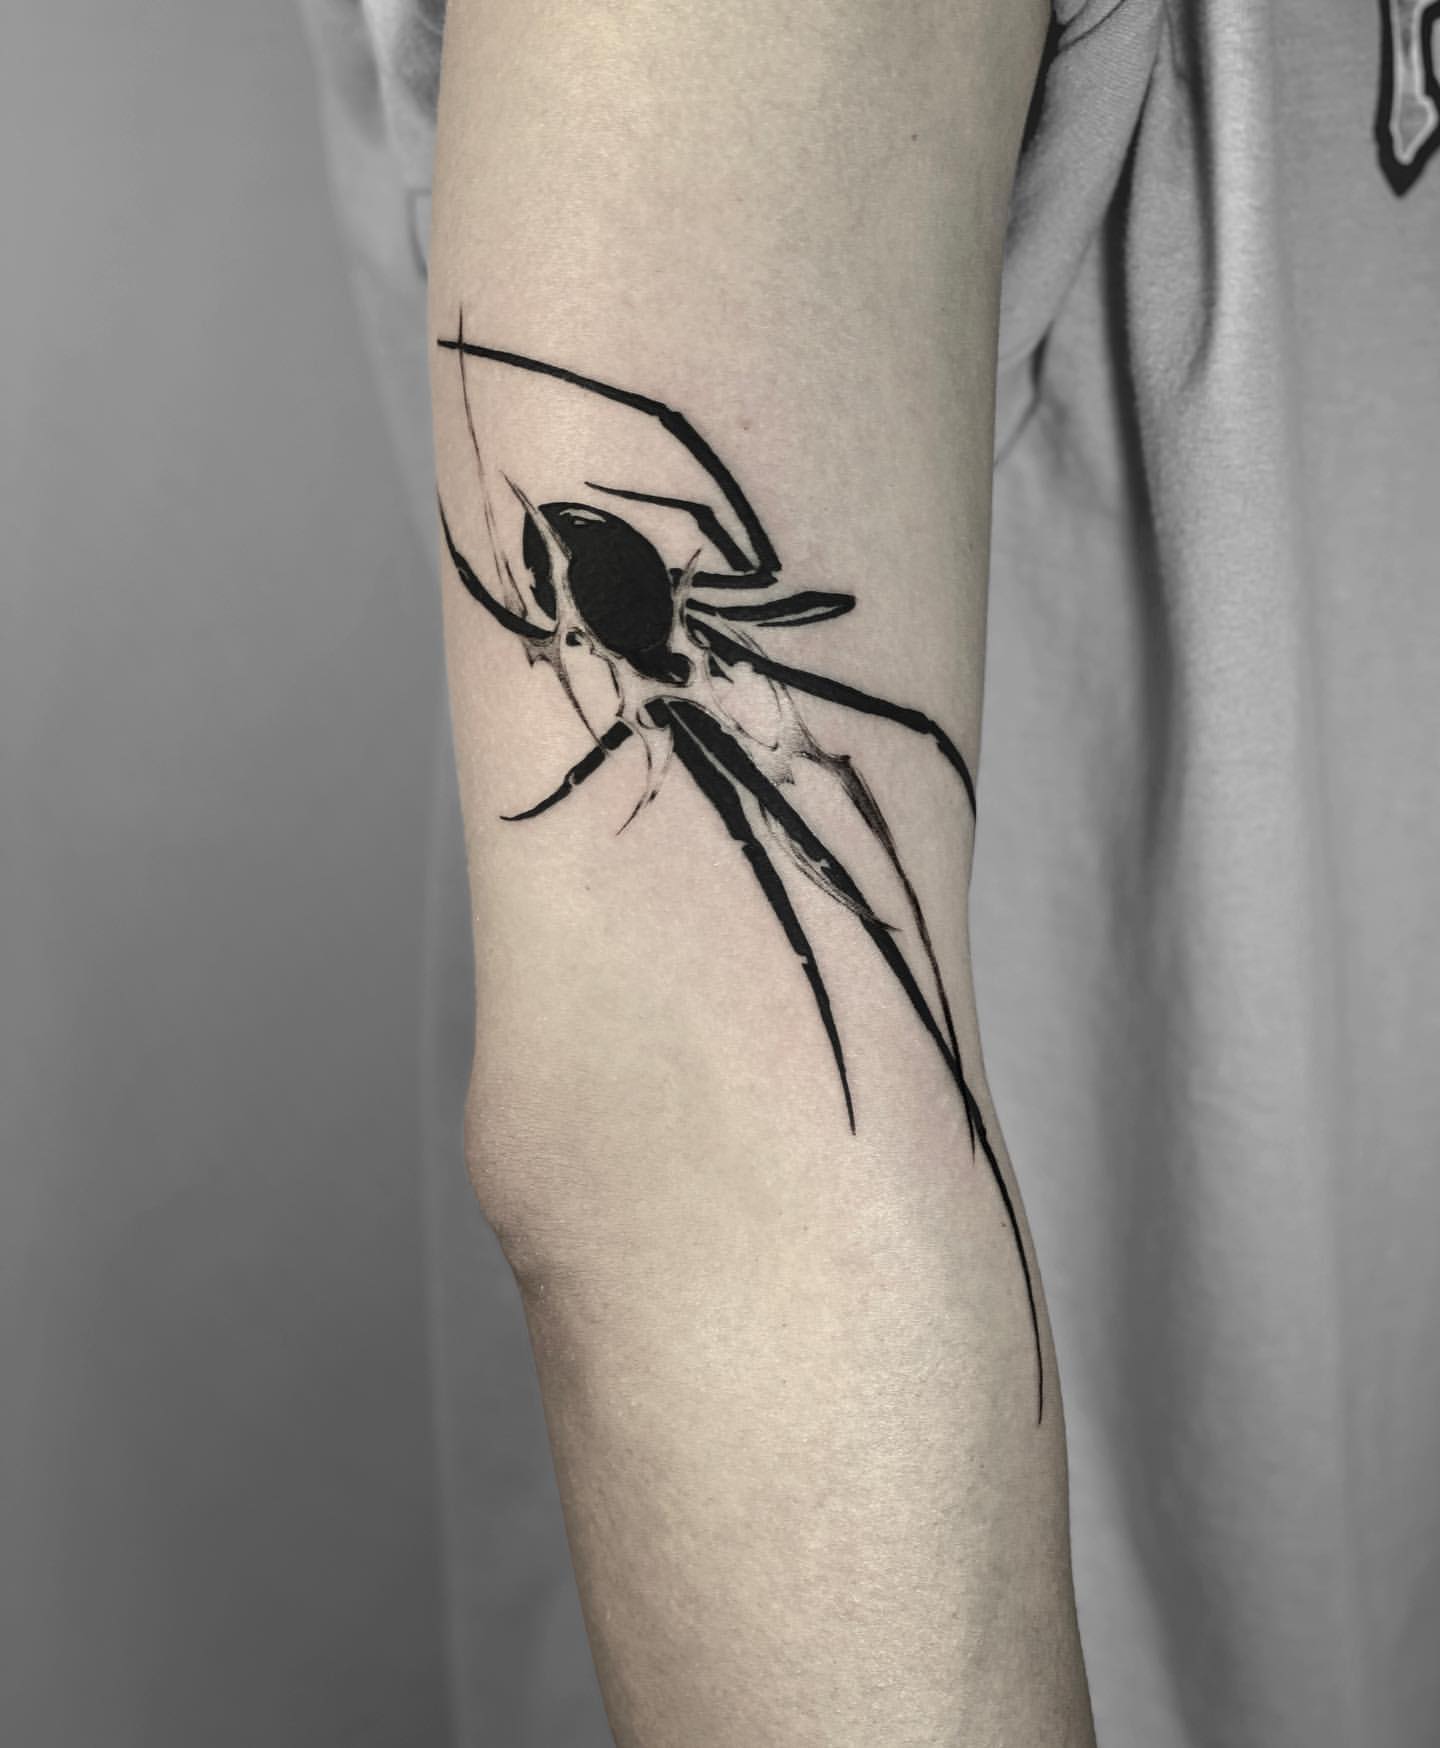 Spider Tattoo Ideas 16